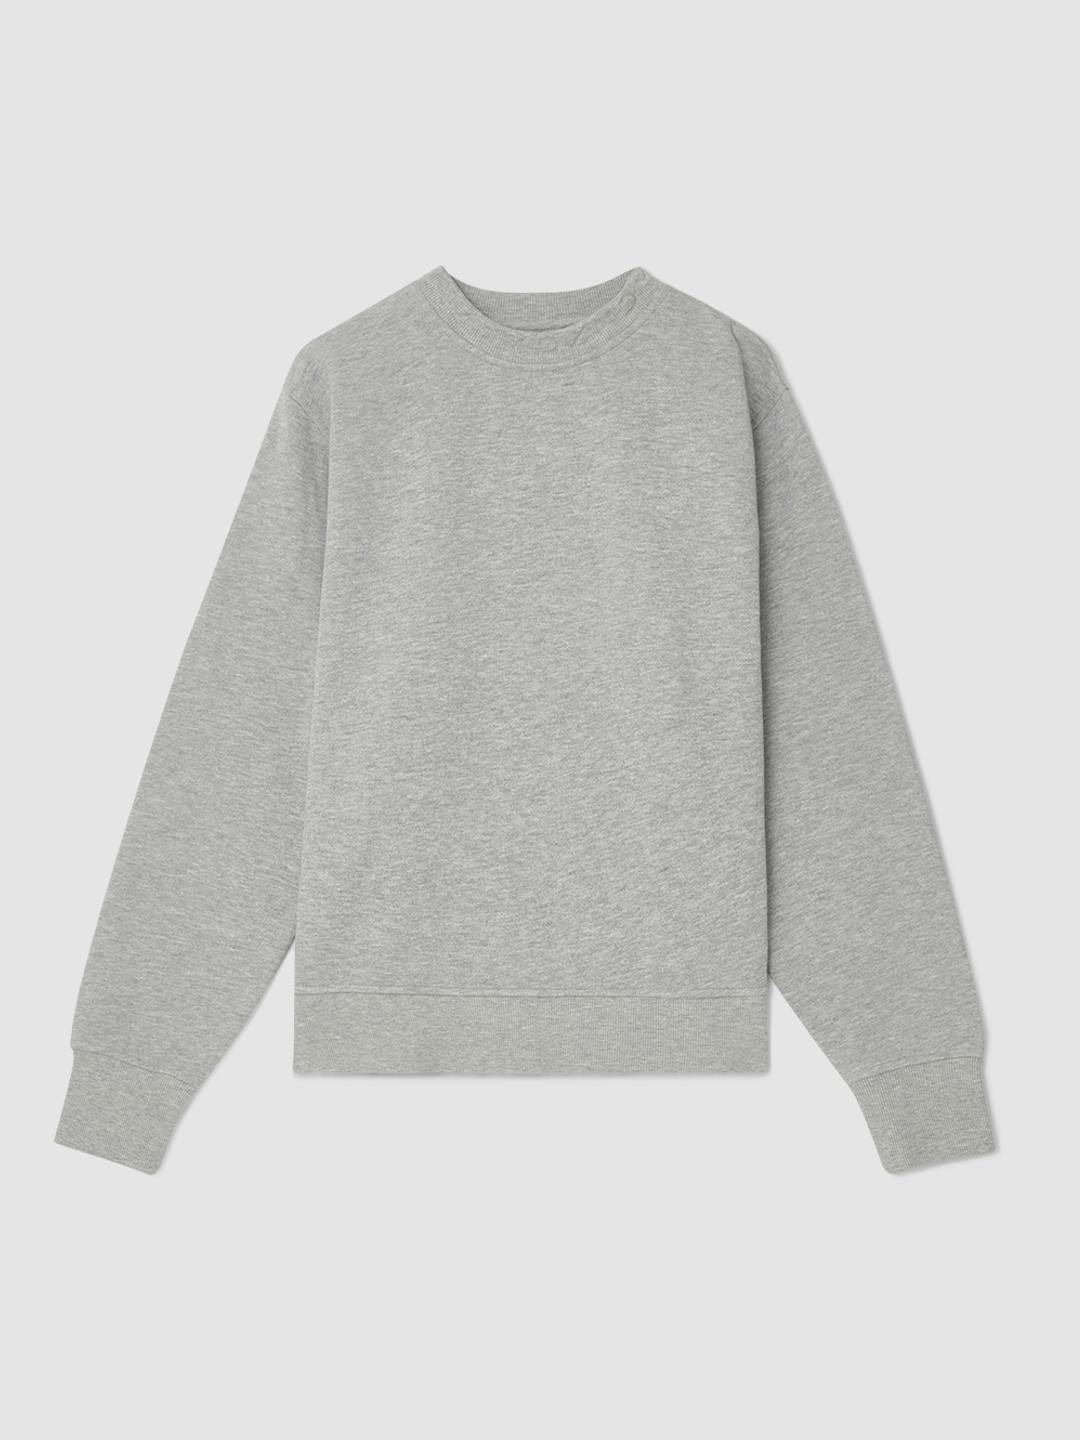 Women's Sweatshirt Light Grey